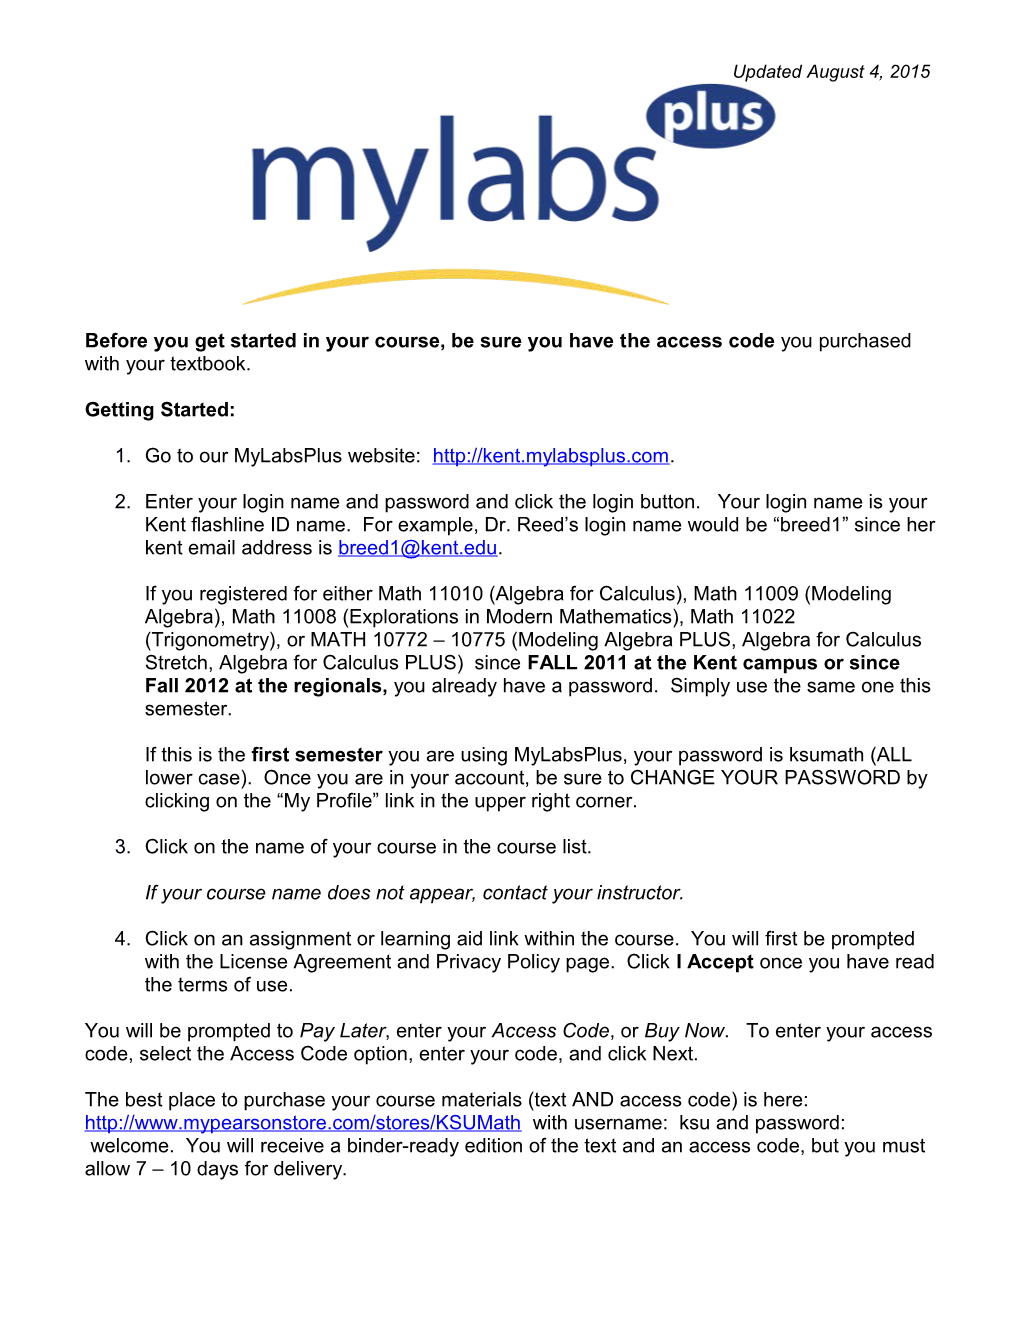 Mylabsplus Student Instructions for Registration and Login